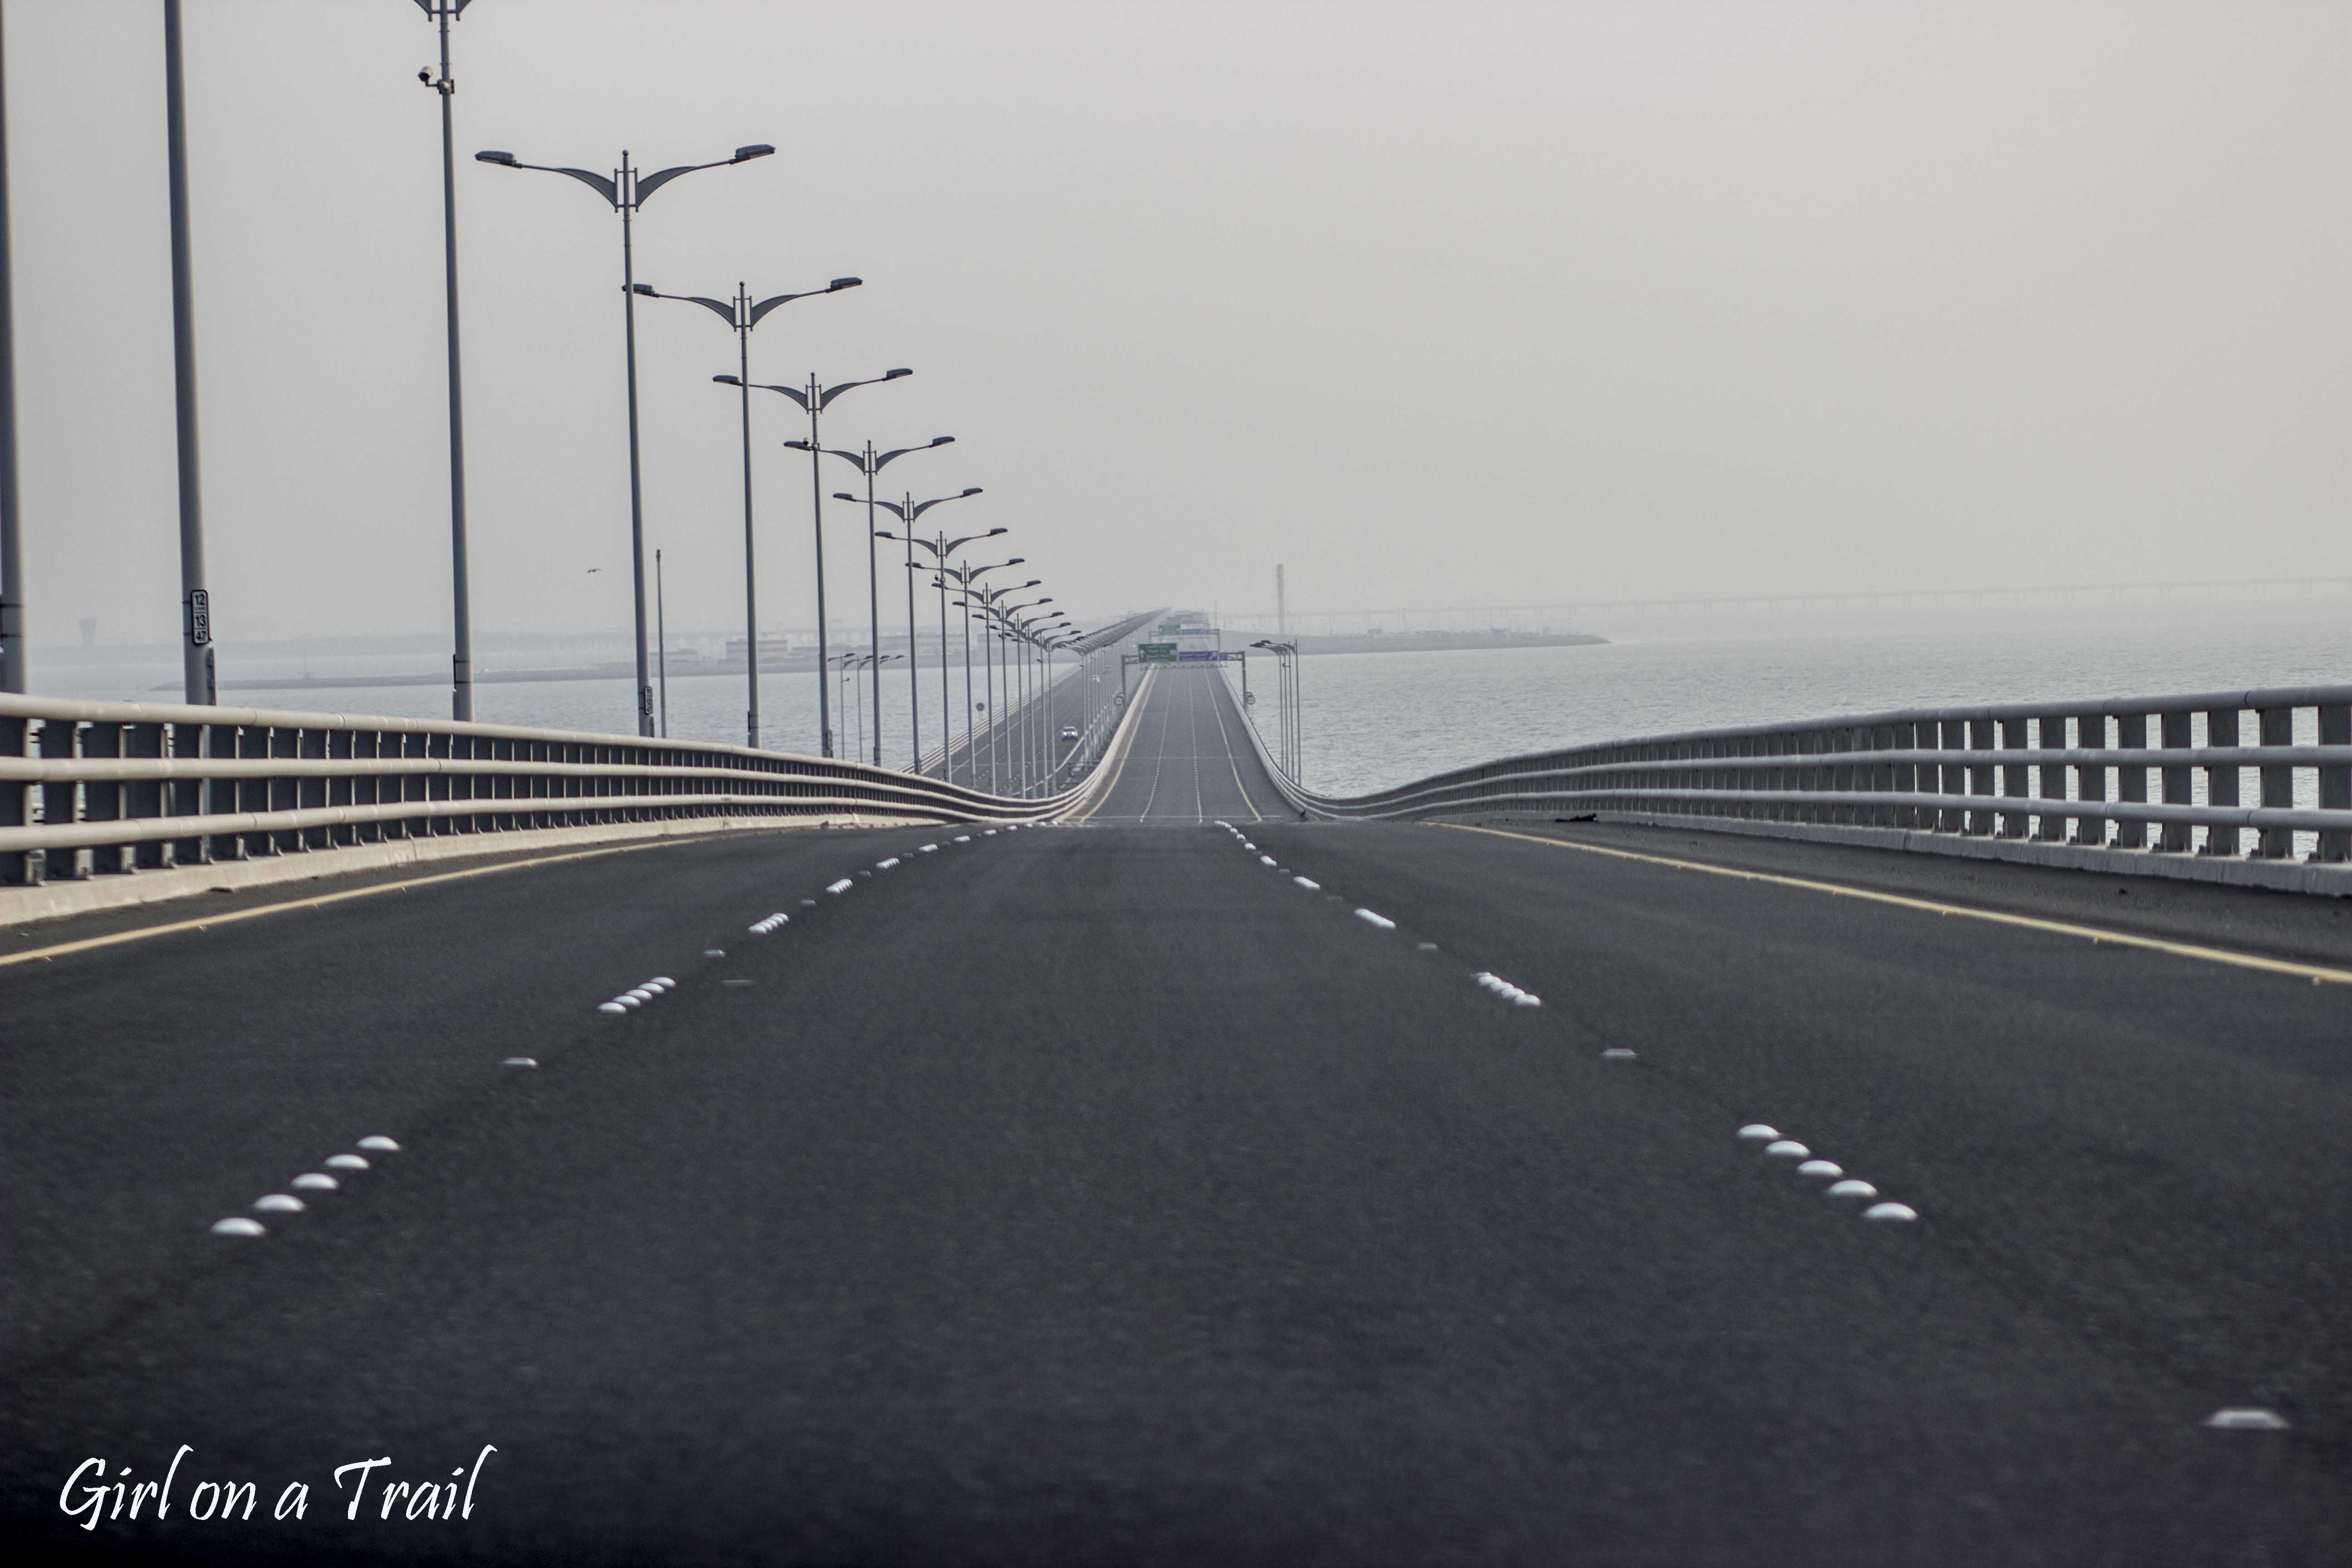 The Sheikh Jaber Al-Ahmad Al-Sabah Causeway